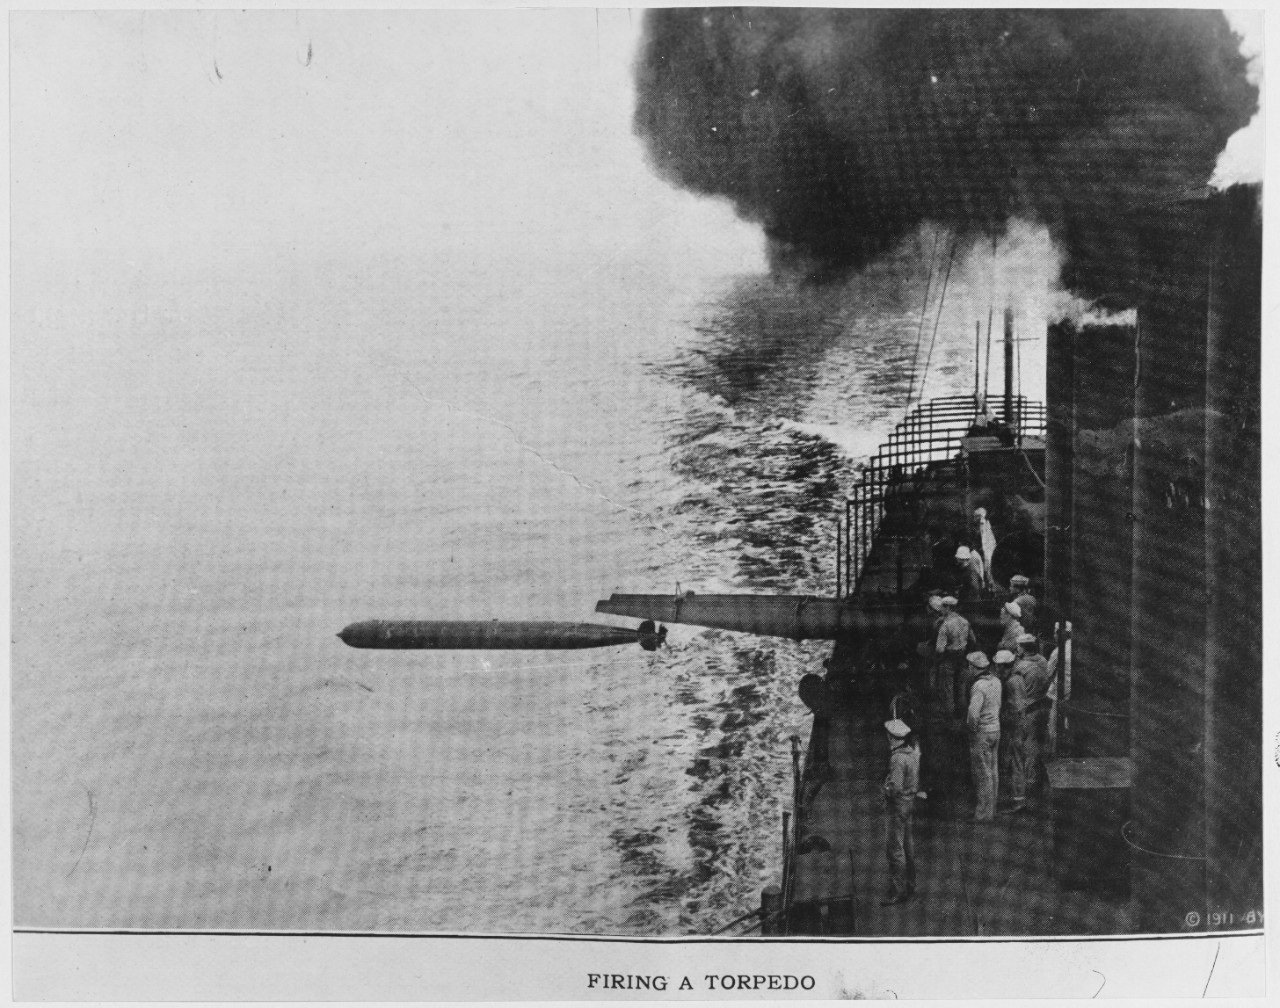 Firing Torpedo, Torpedo practice. 1911